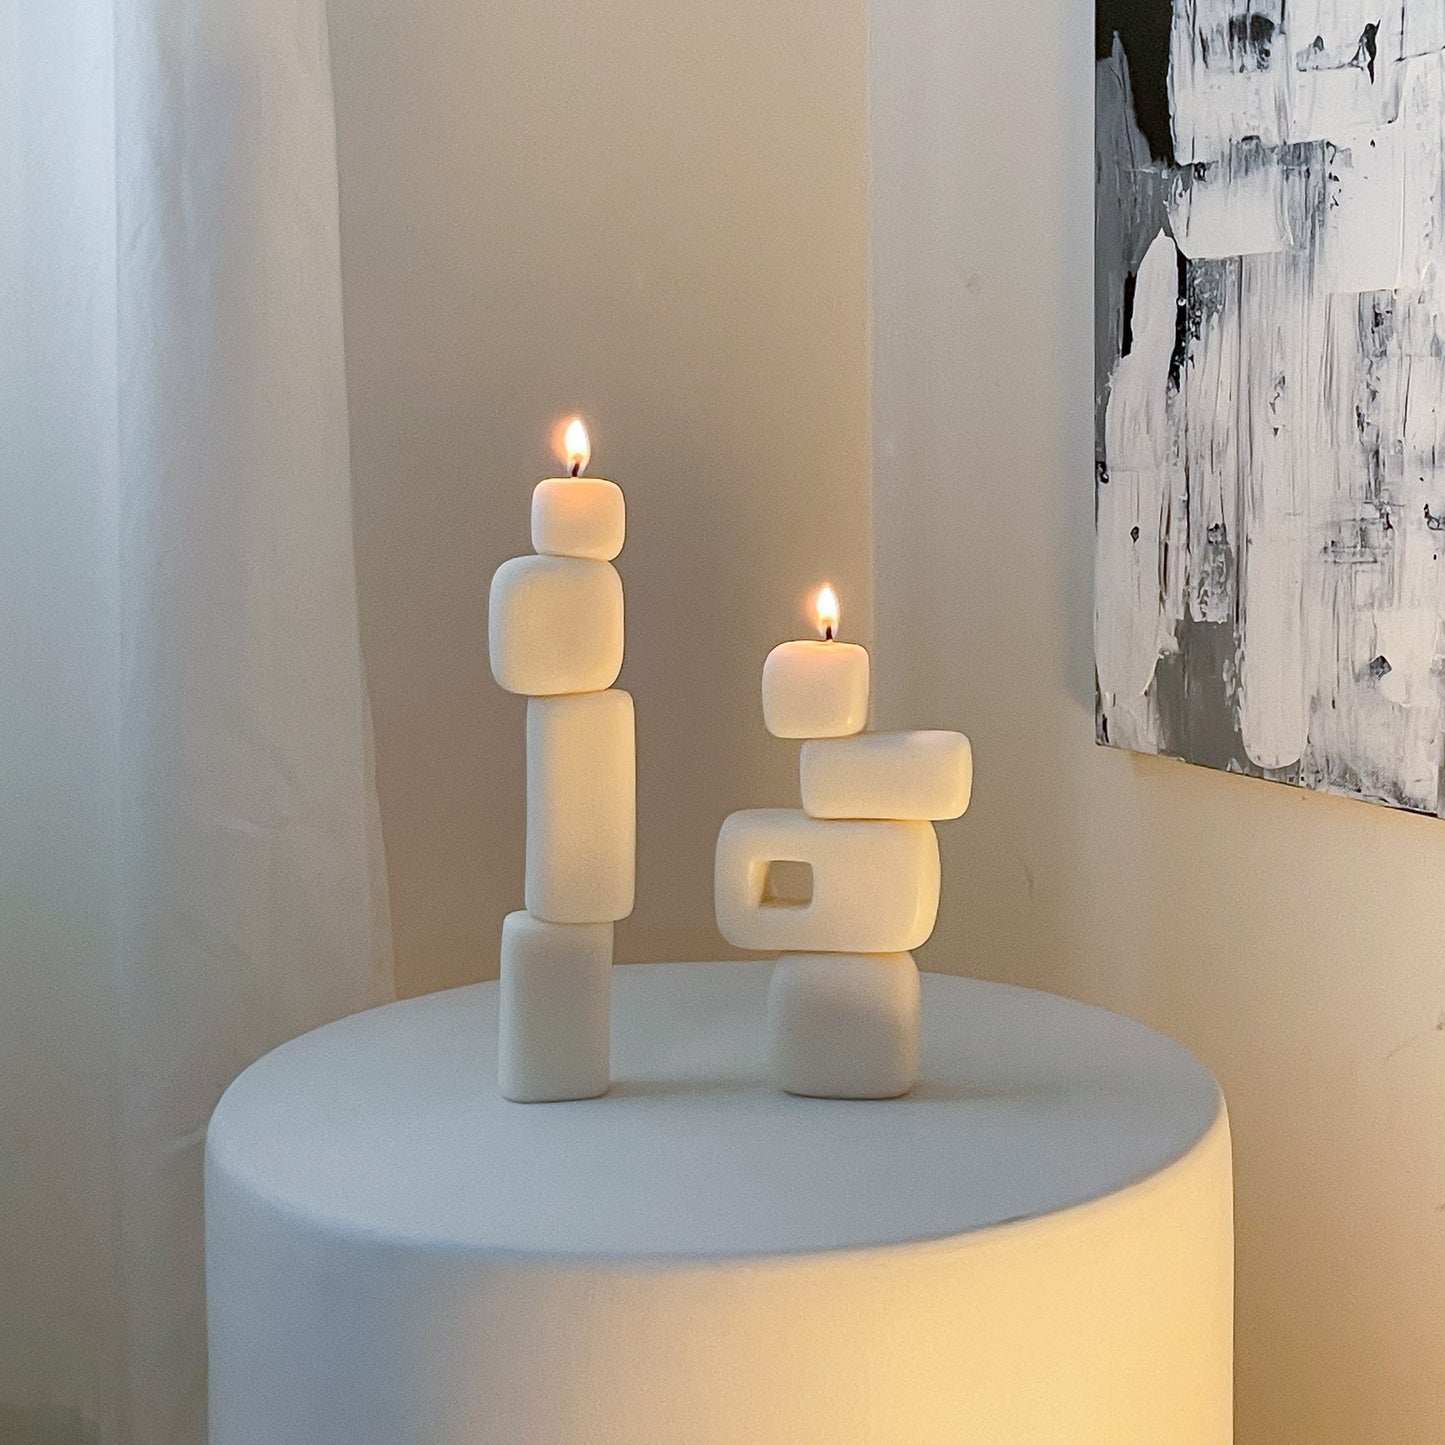 Cubed Sculptural Candle